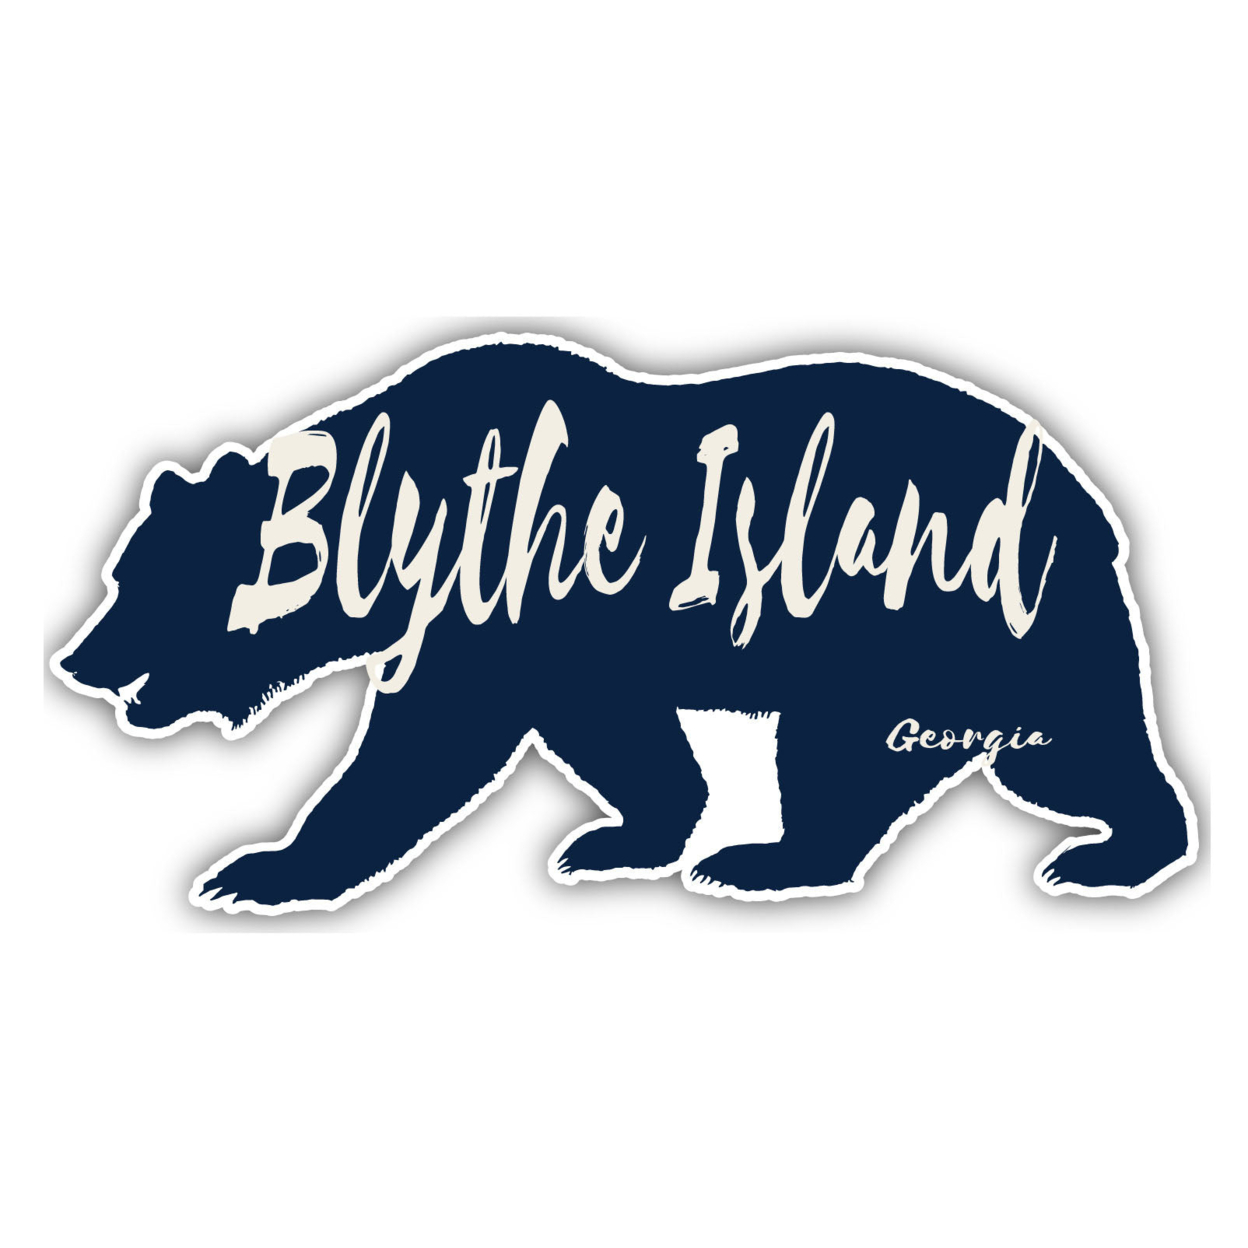 Blythe Island Georgia Souvenir Decorative Stickers (Choose Theme And Size) - 4-Pack, 8-Inch, Bear